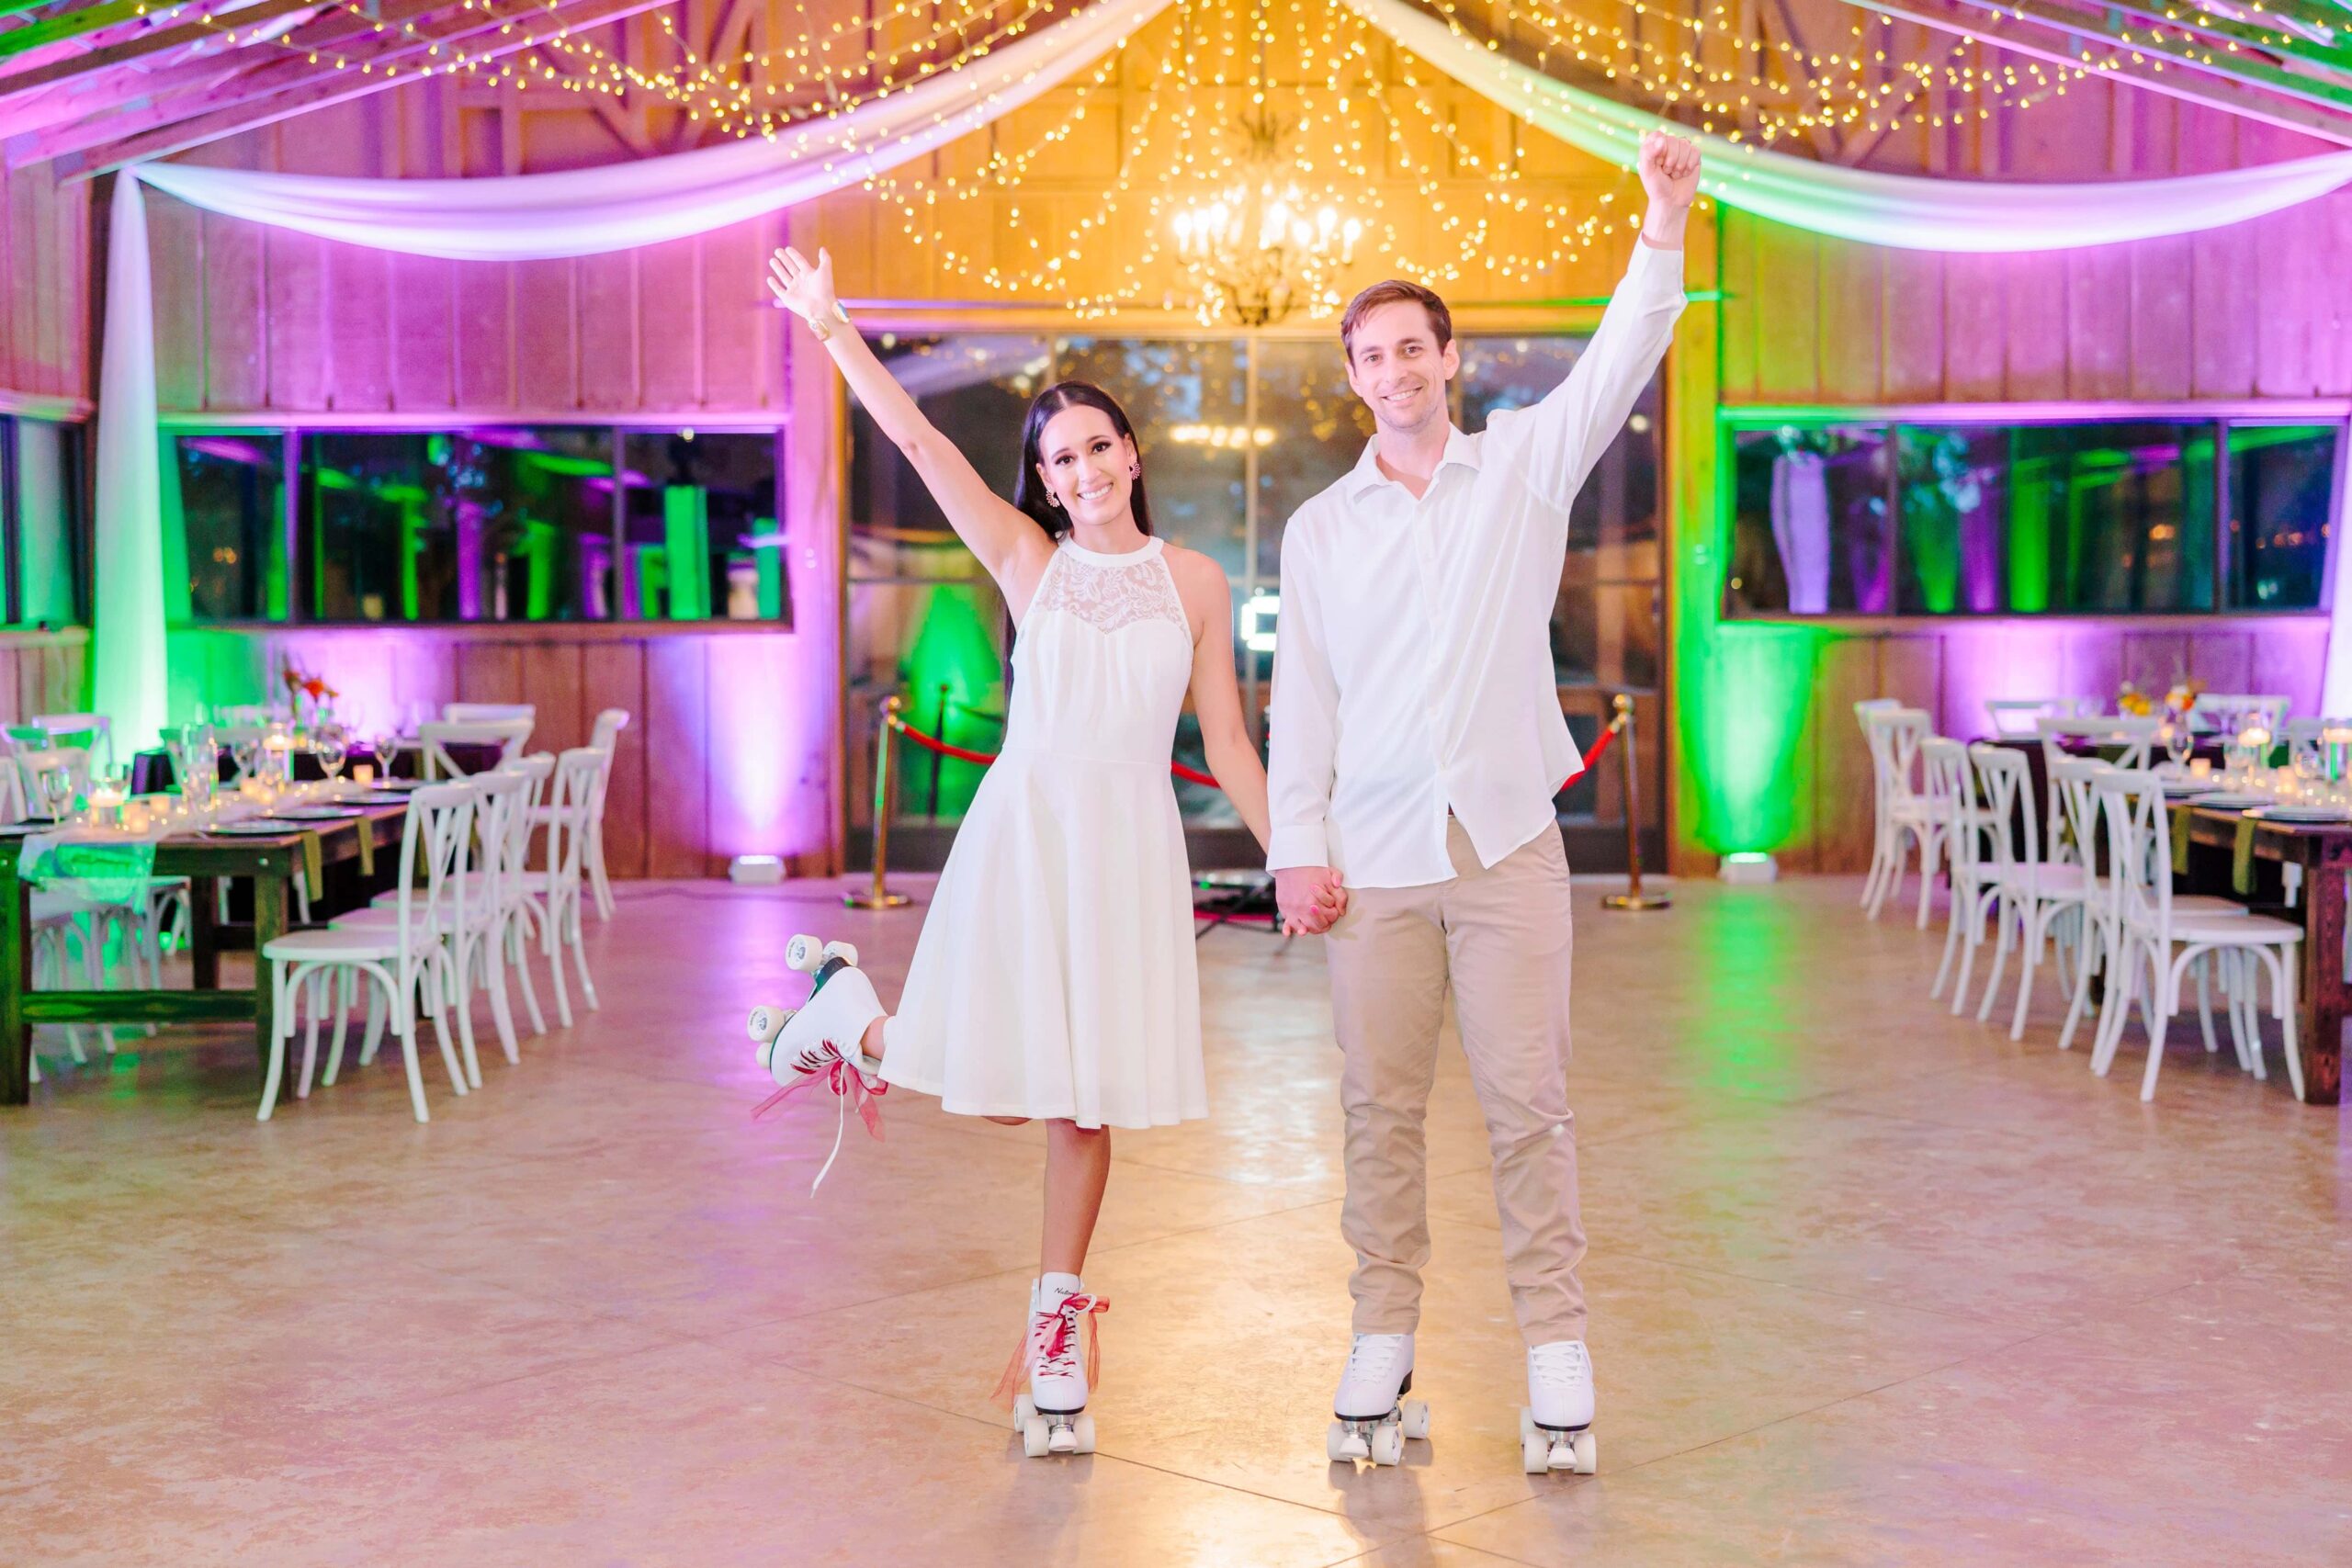 A disco wedding where the bride and groom roller skate through the venue hall.